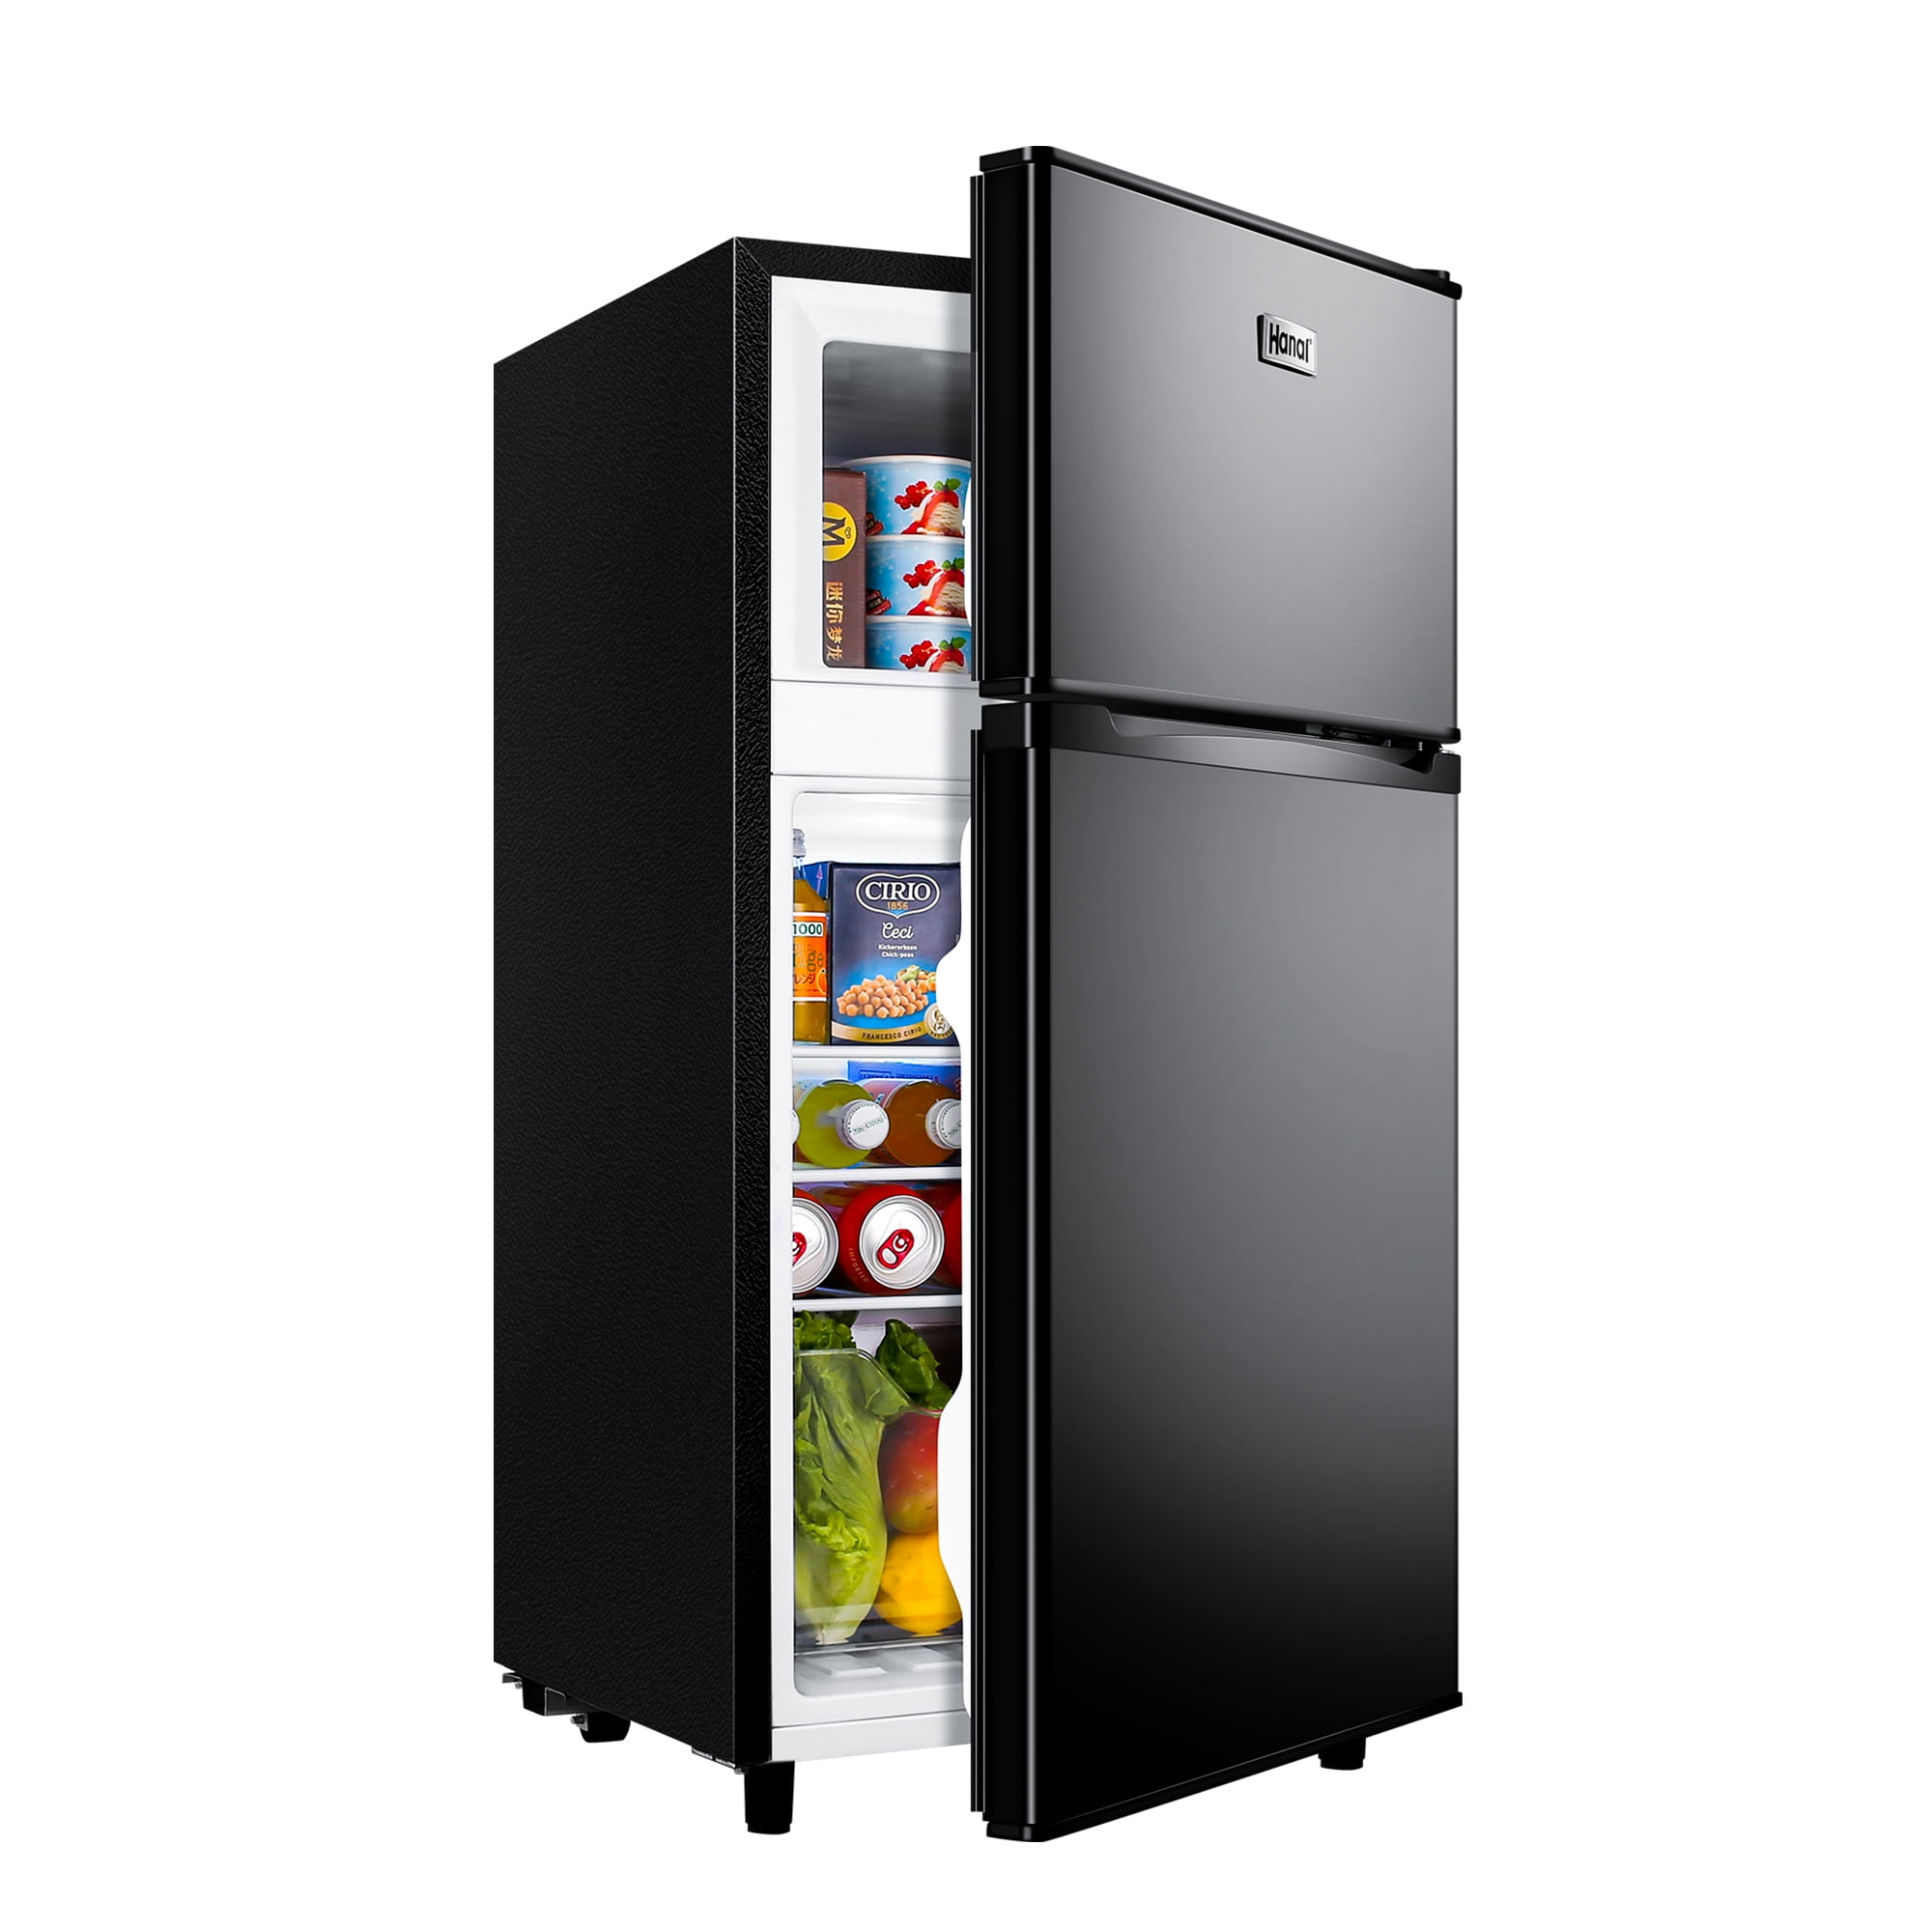 Euhomy Mini Fridge with Freezer, 3.2 CU.FT Mini Refrigerator with Freezer, Dorm Fridge with Freezer 2 Door for Bedroom/Dorm/Apartment/Office - Food